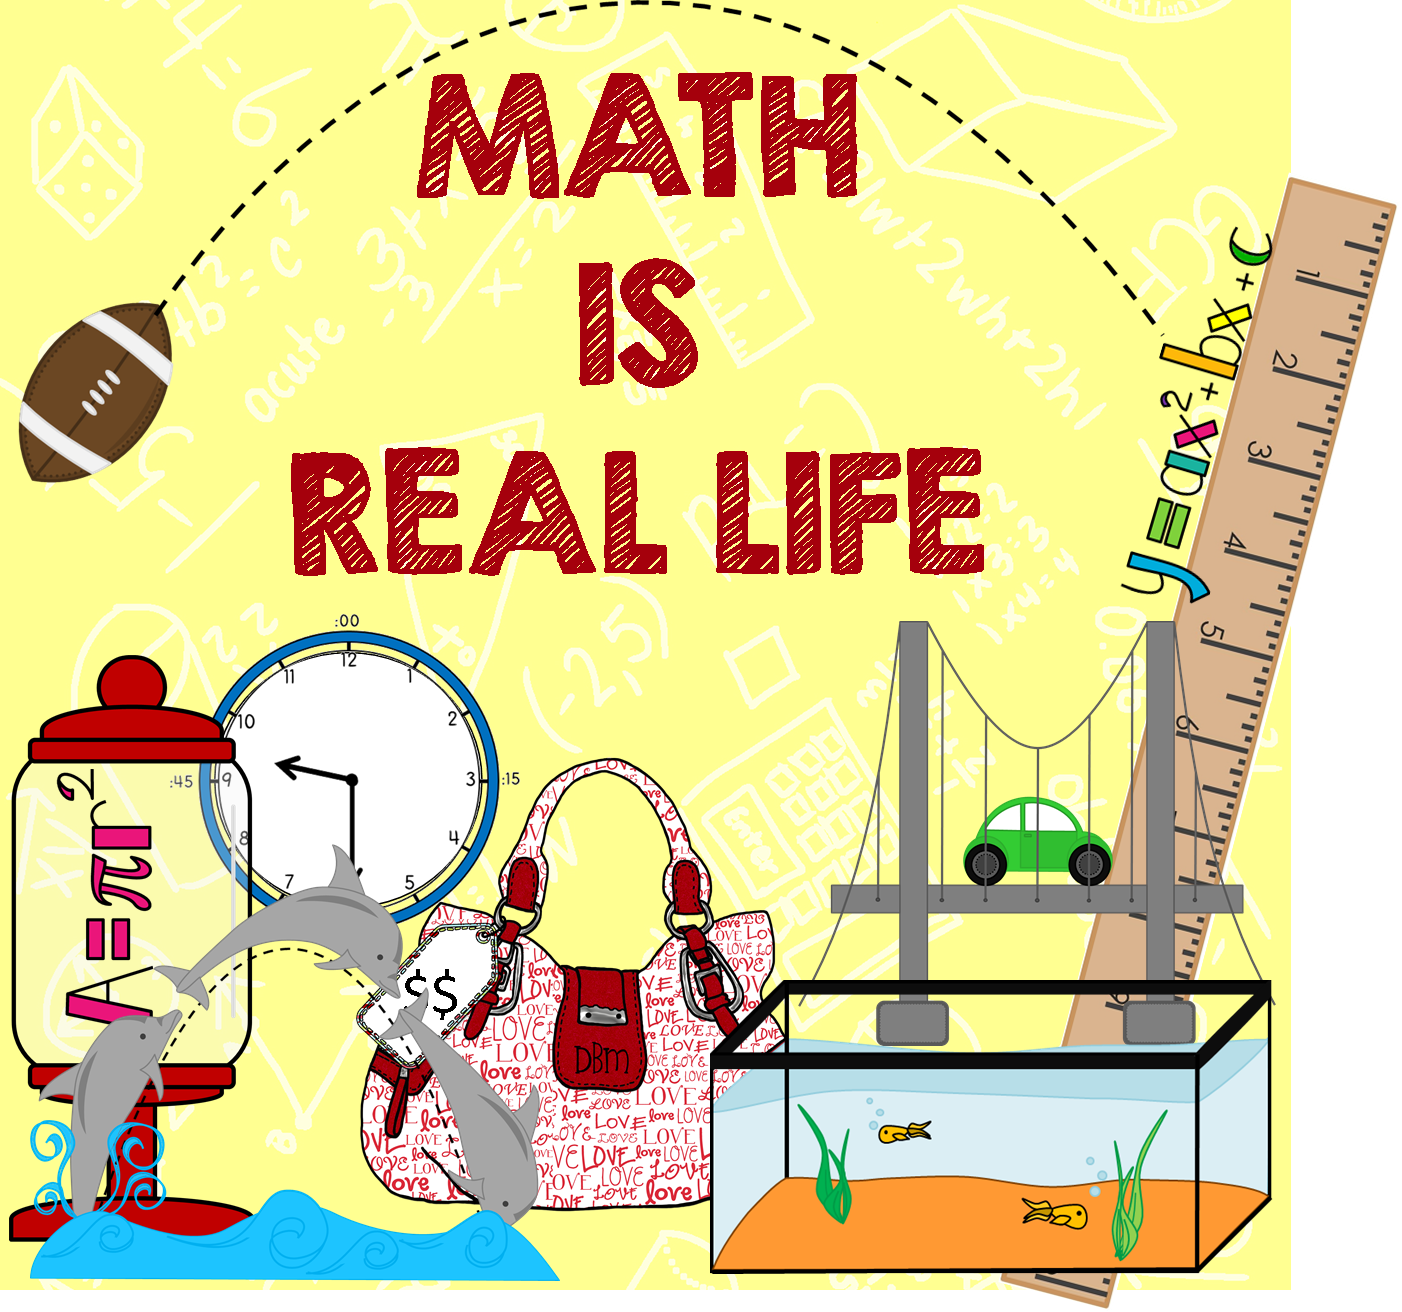 He in mathematics. In математика. Математика клипарт. Life is Math. I Love Math креативная математика.